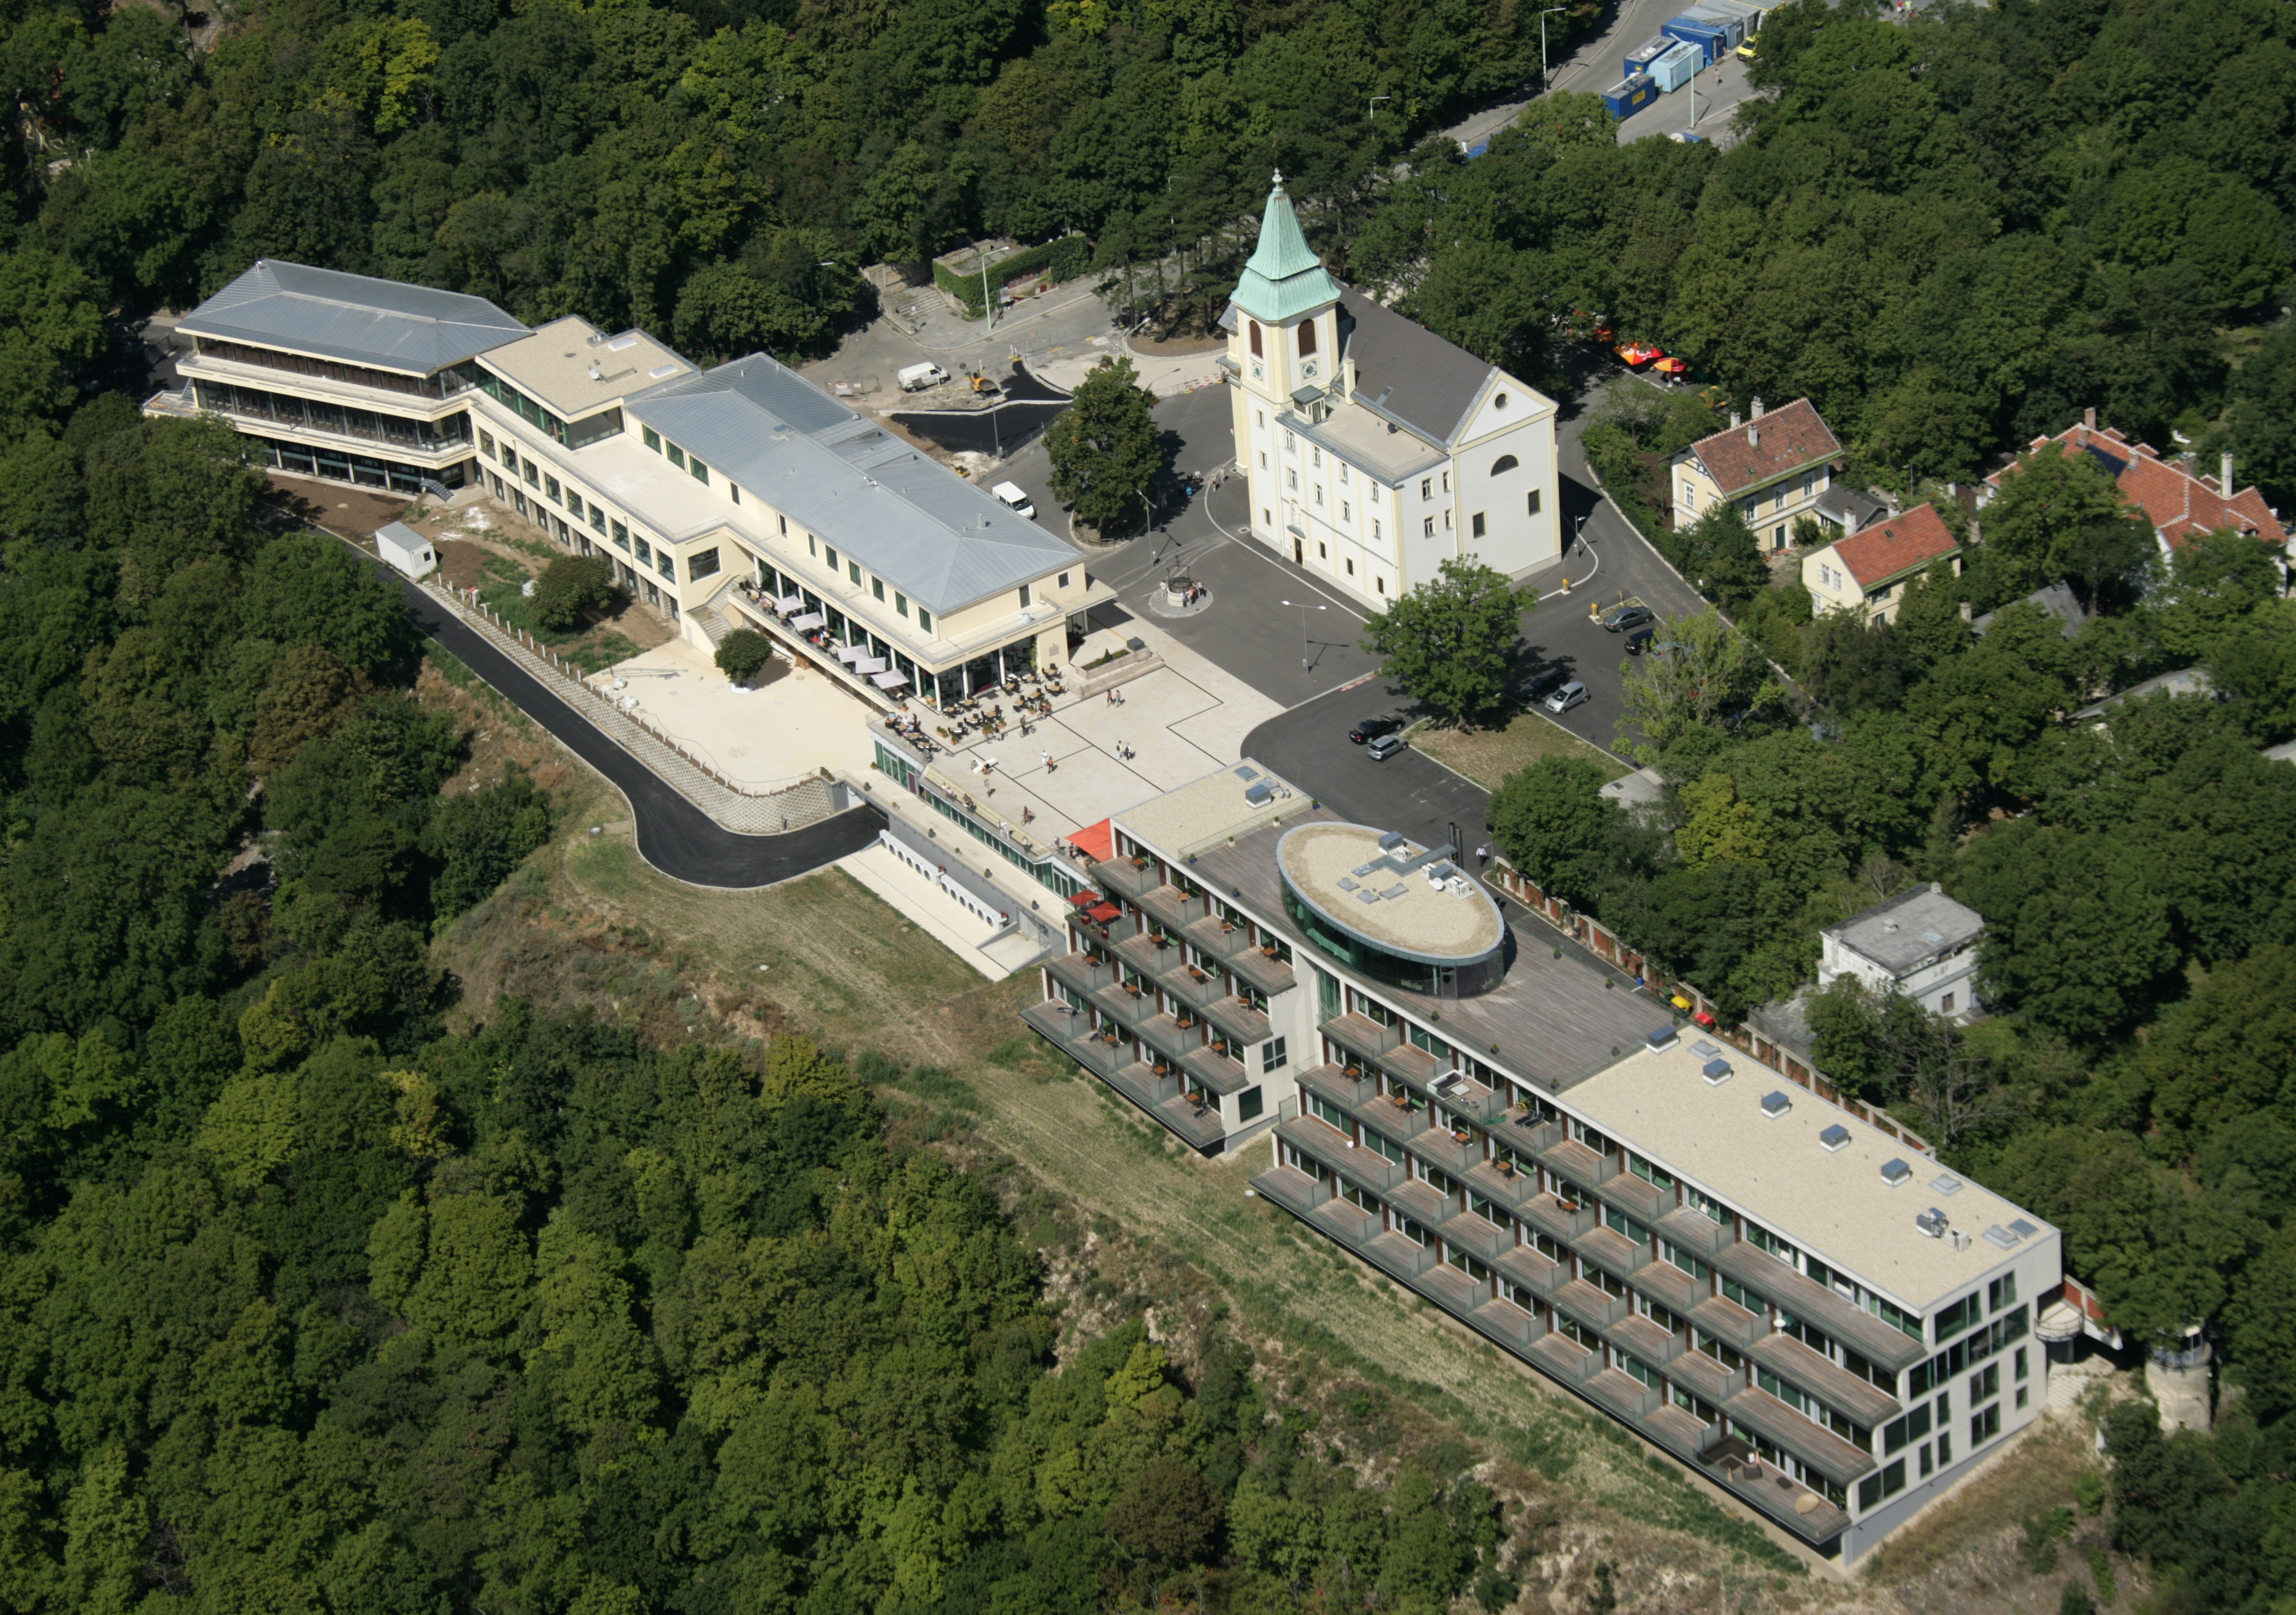 Hotel Kahlenberg - Budownictwo lądowe naziemne